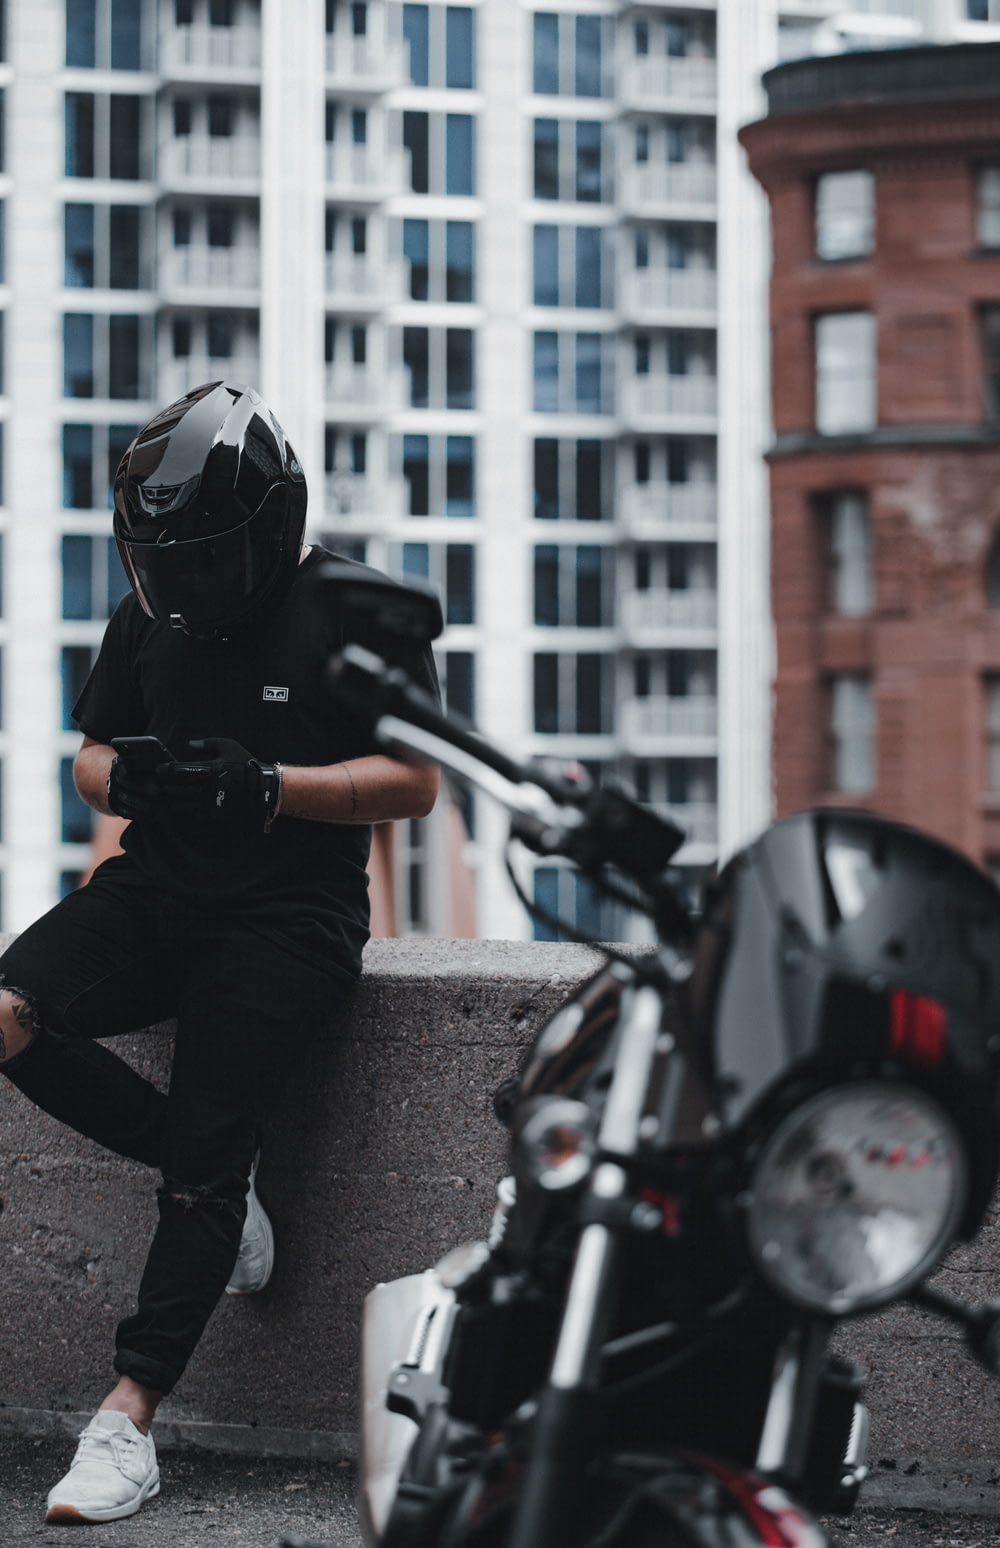 man in black jacket and gray pants wearing black helmet riding motorcycle during daytime